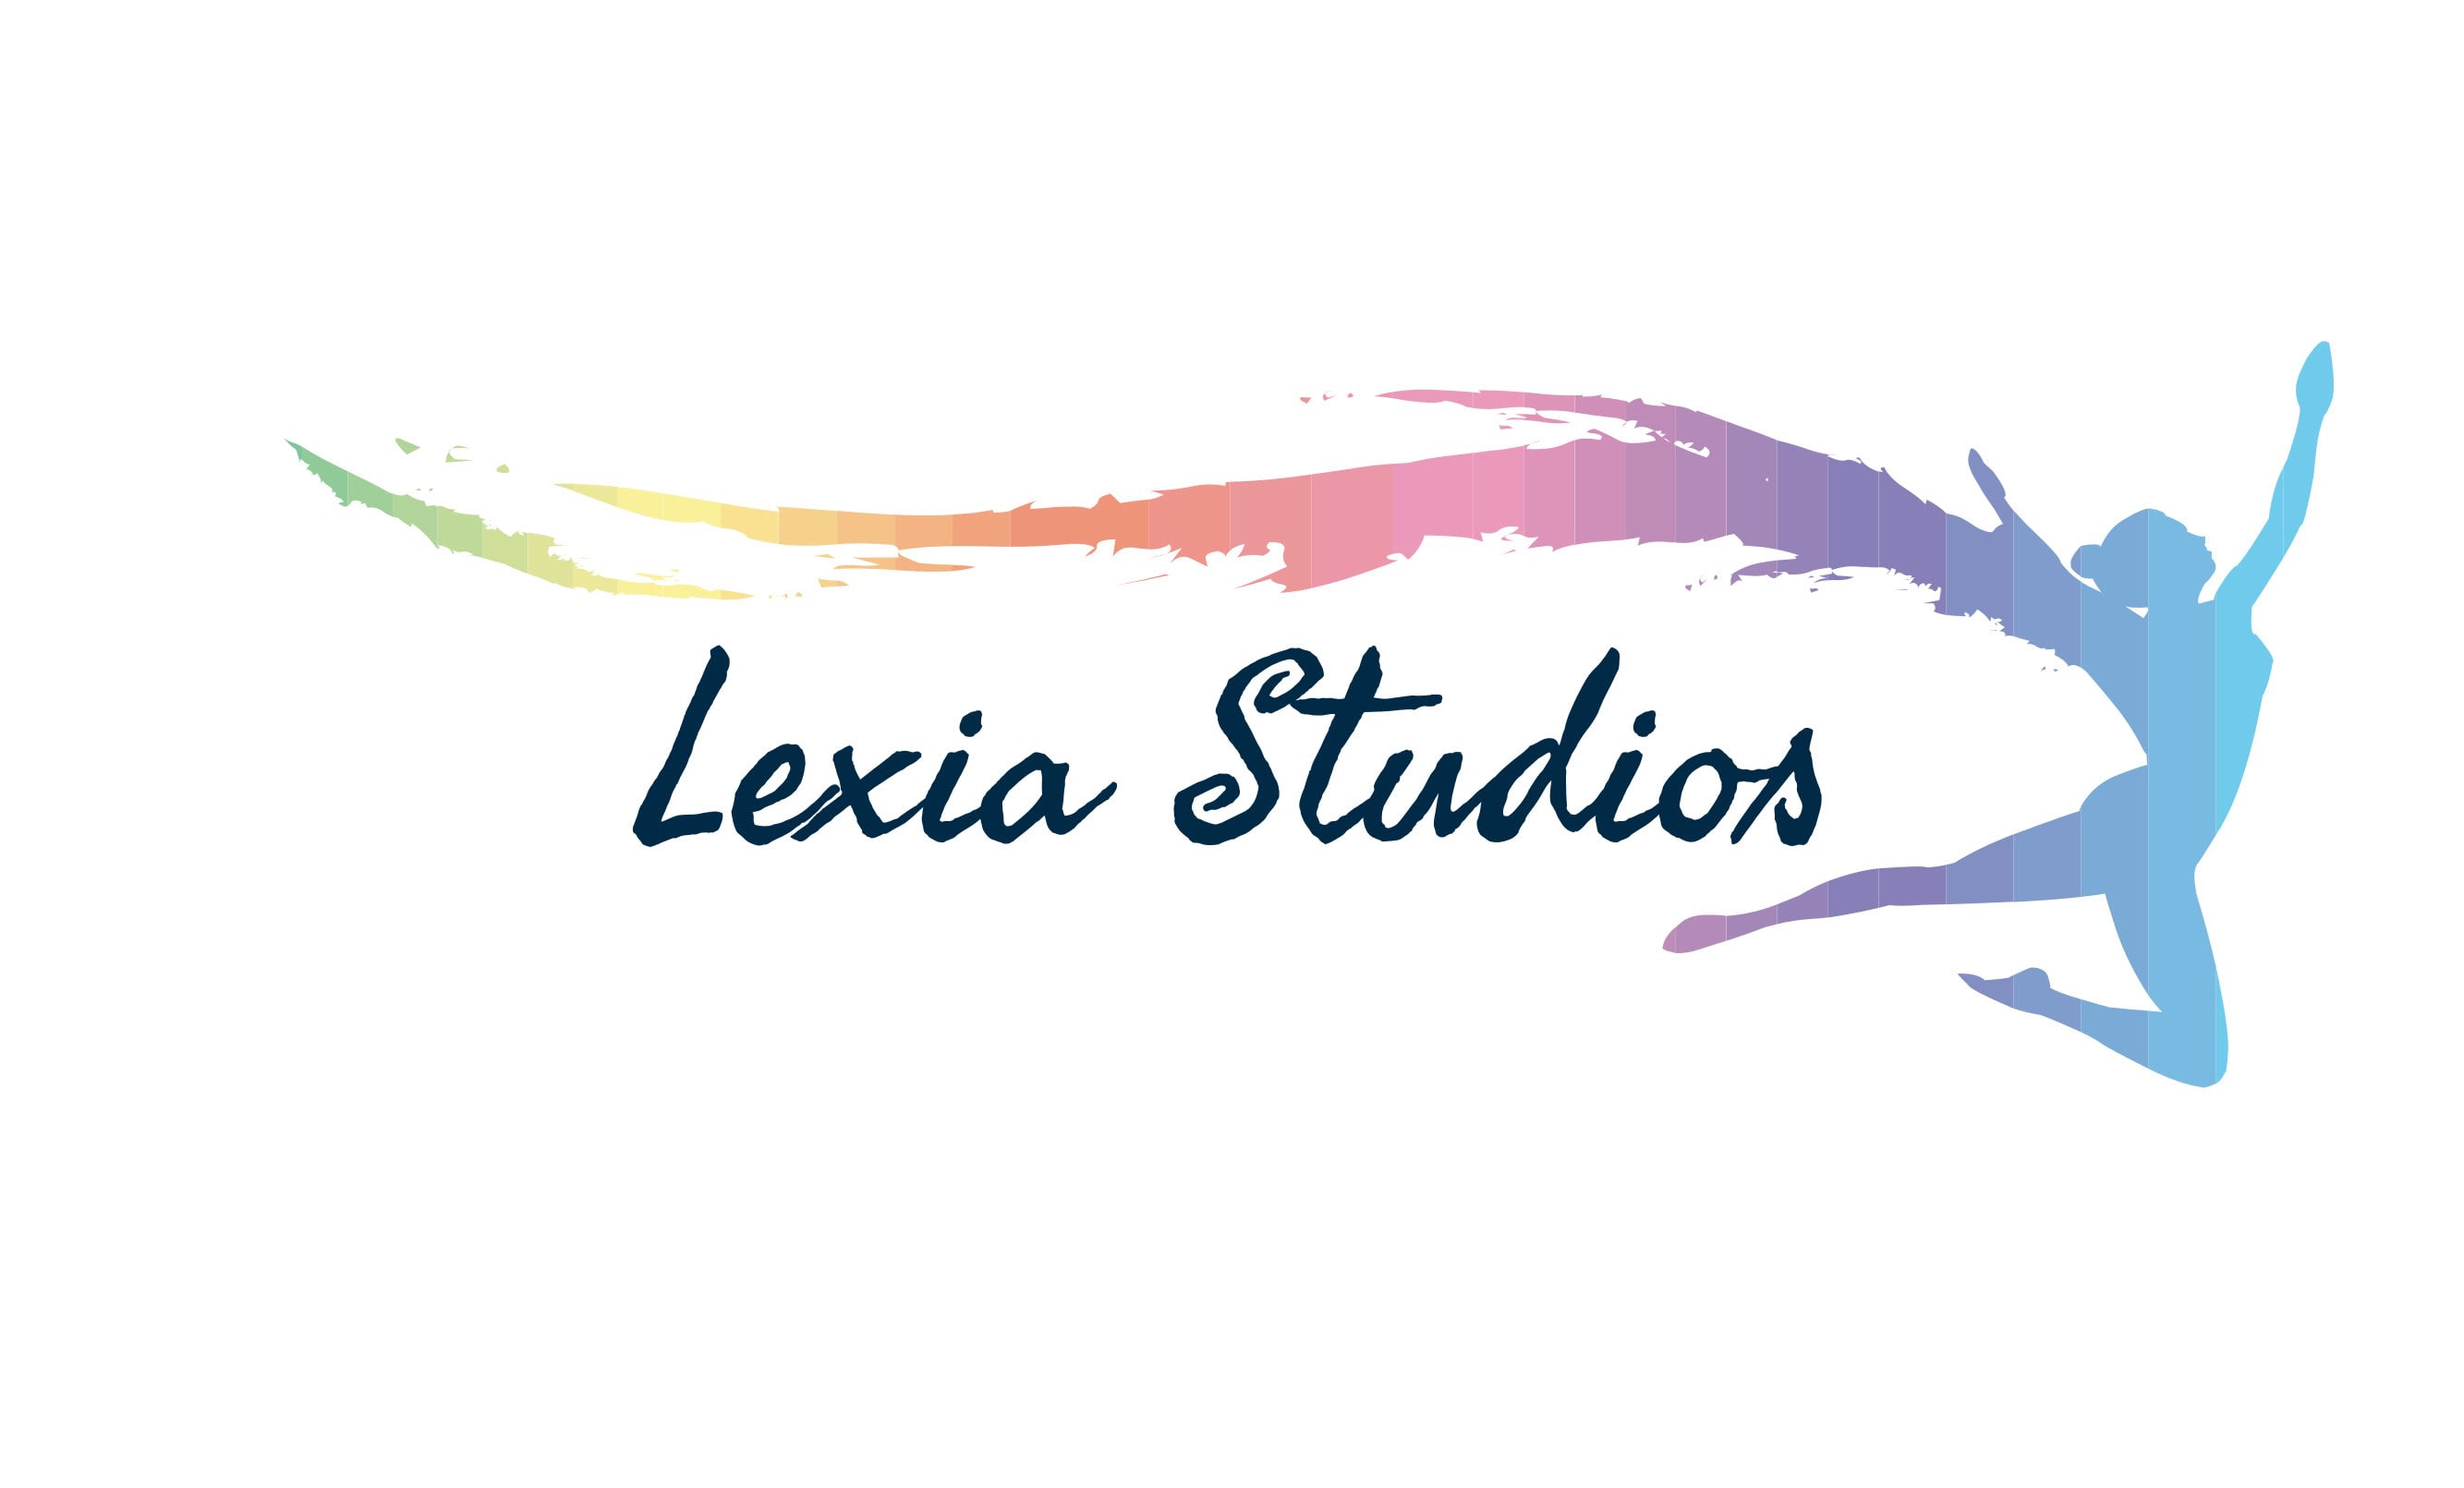 Lexia Studios